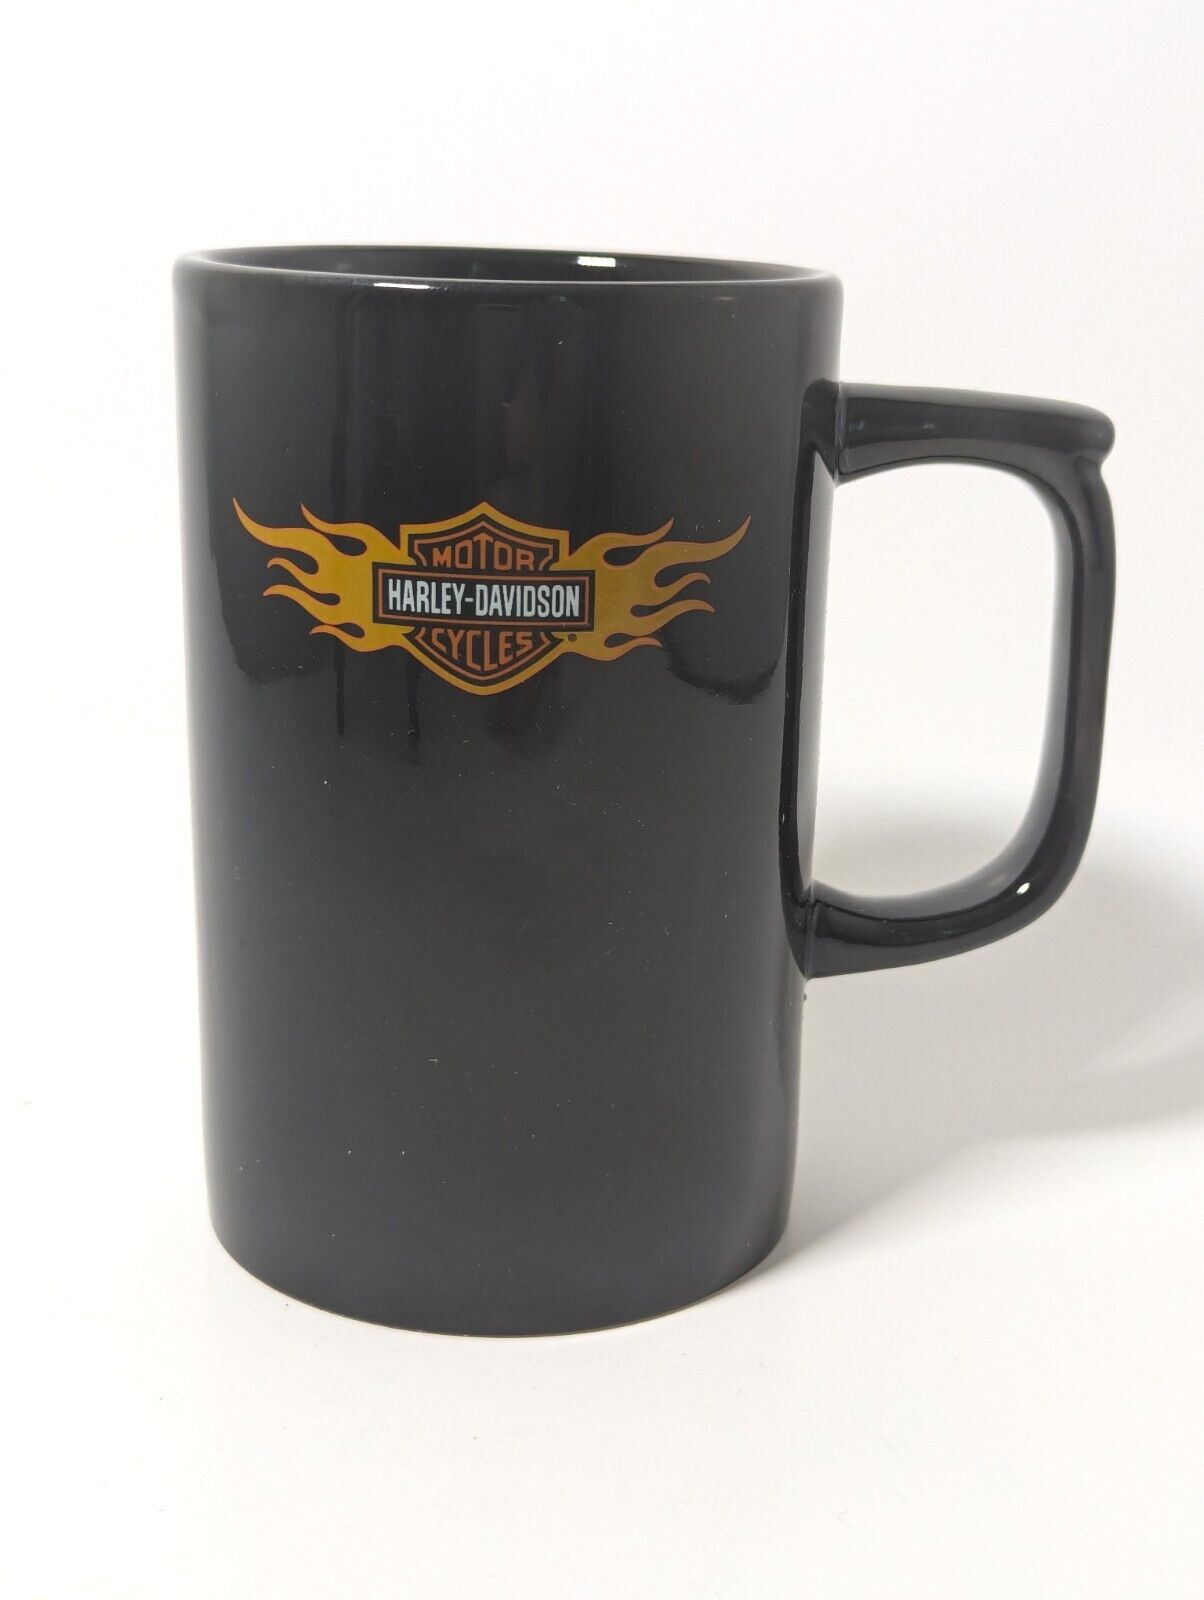 Harley Davidson 16 oz Coffee Mug Cup Hallmark 2004